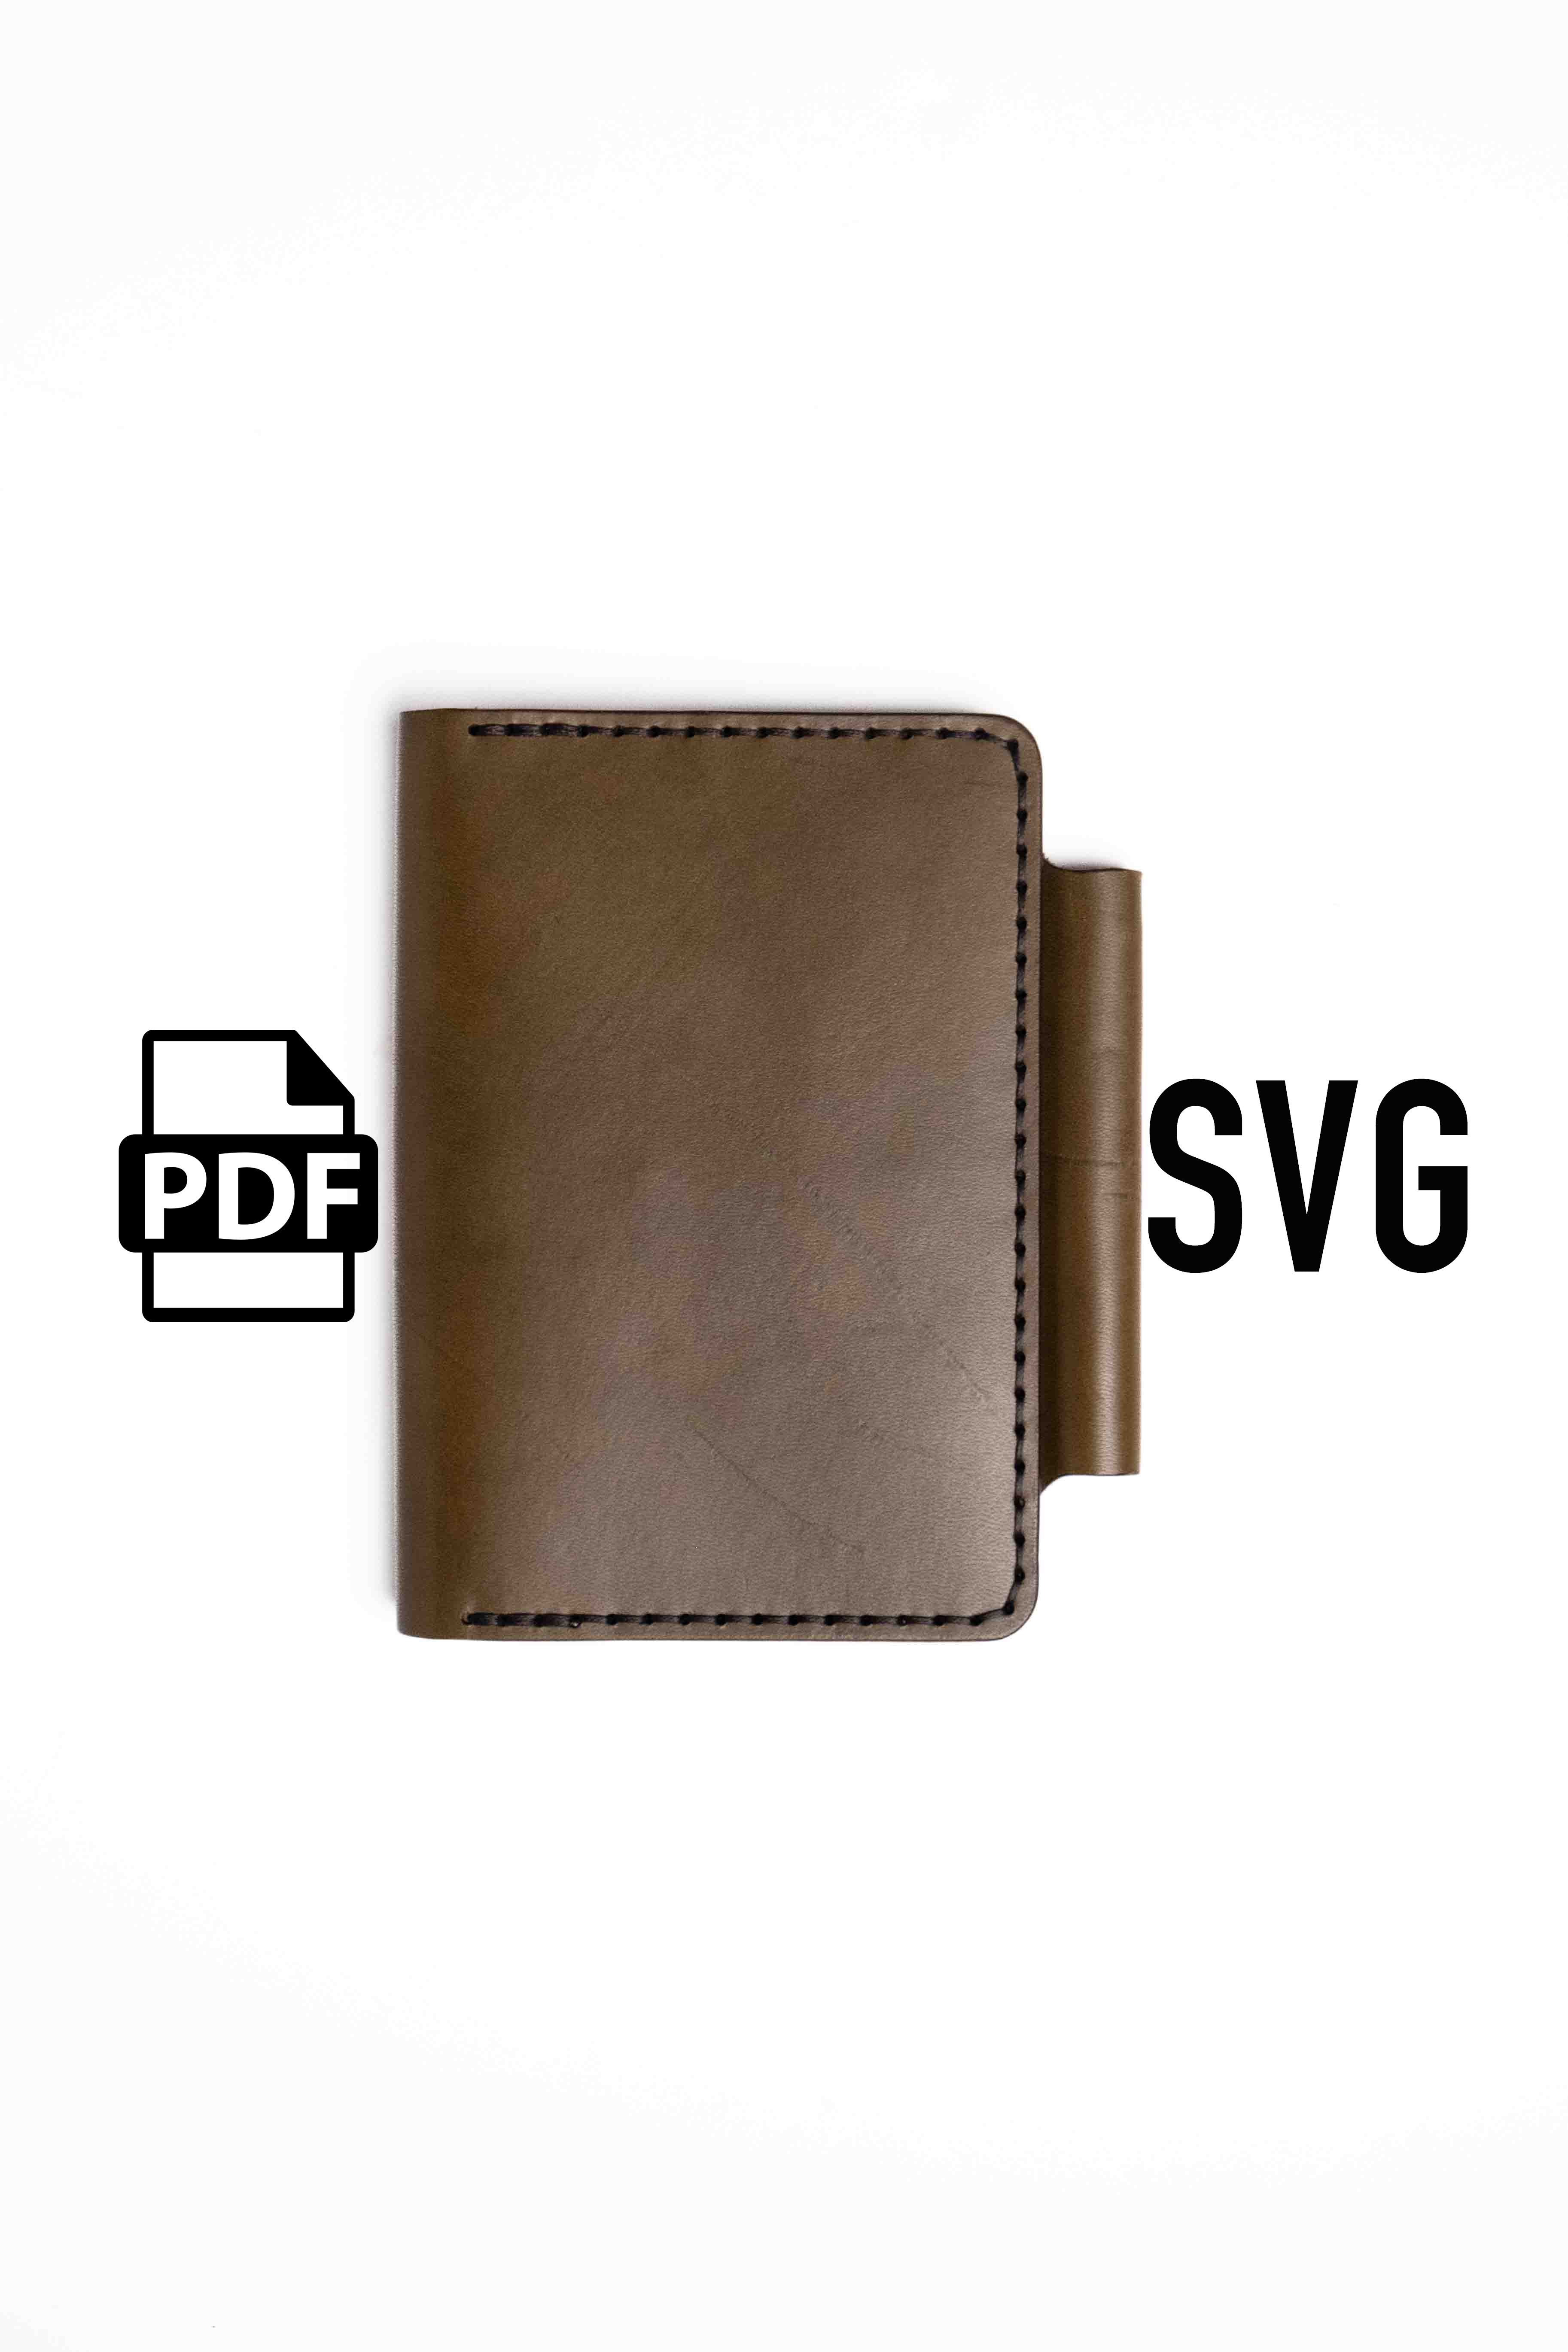 Field Notes Journal Wallet W/ Pen Loop | PDF/SVG Template